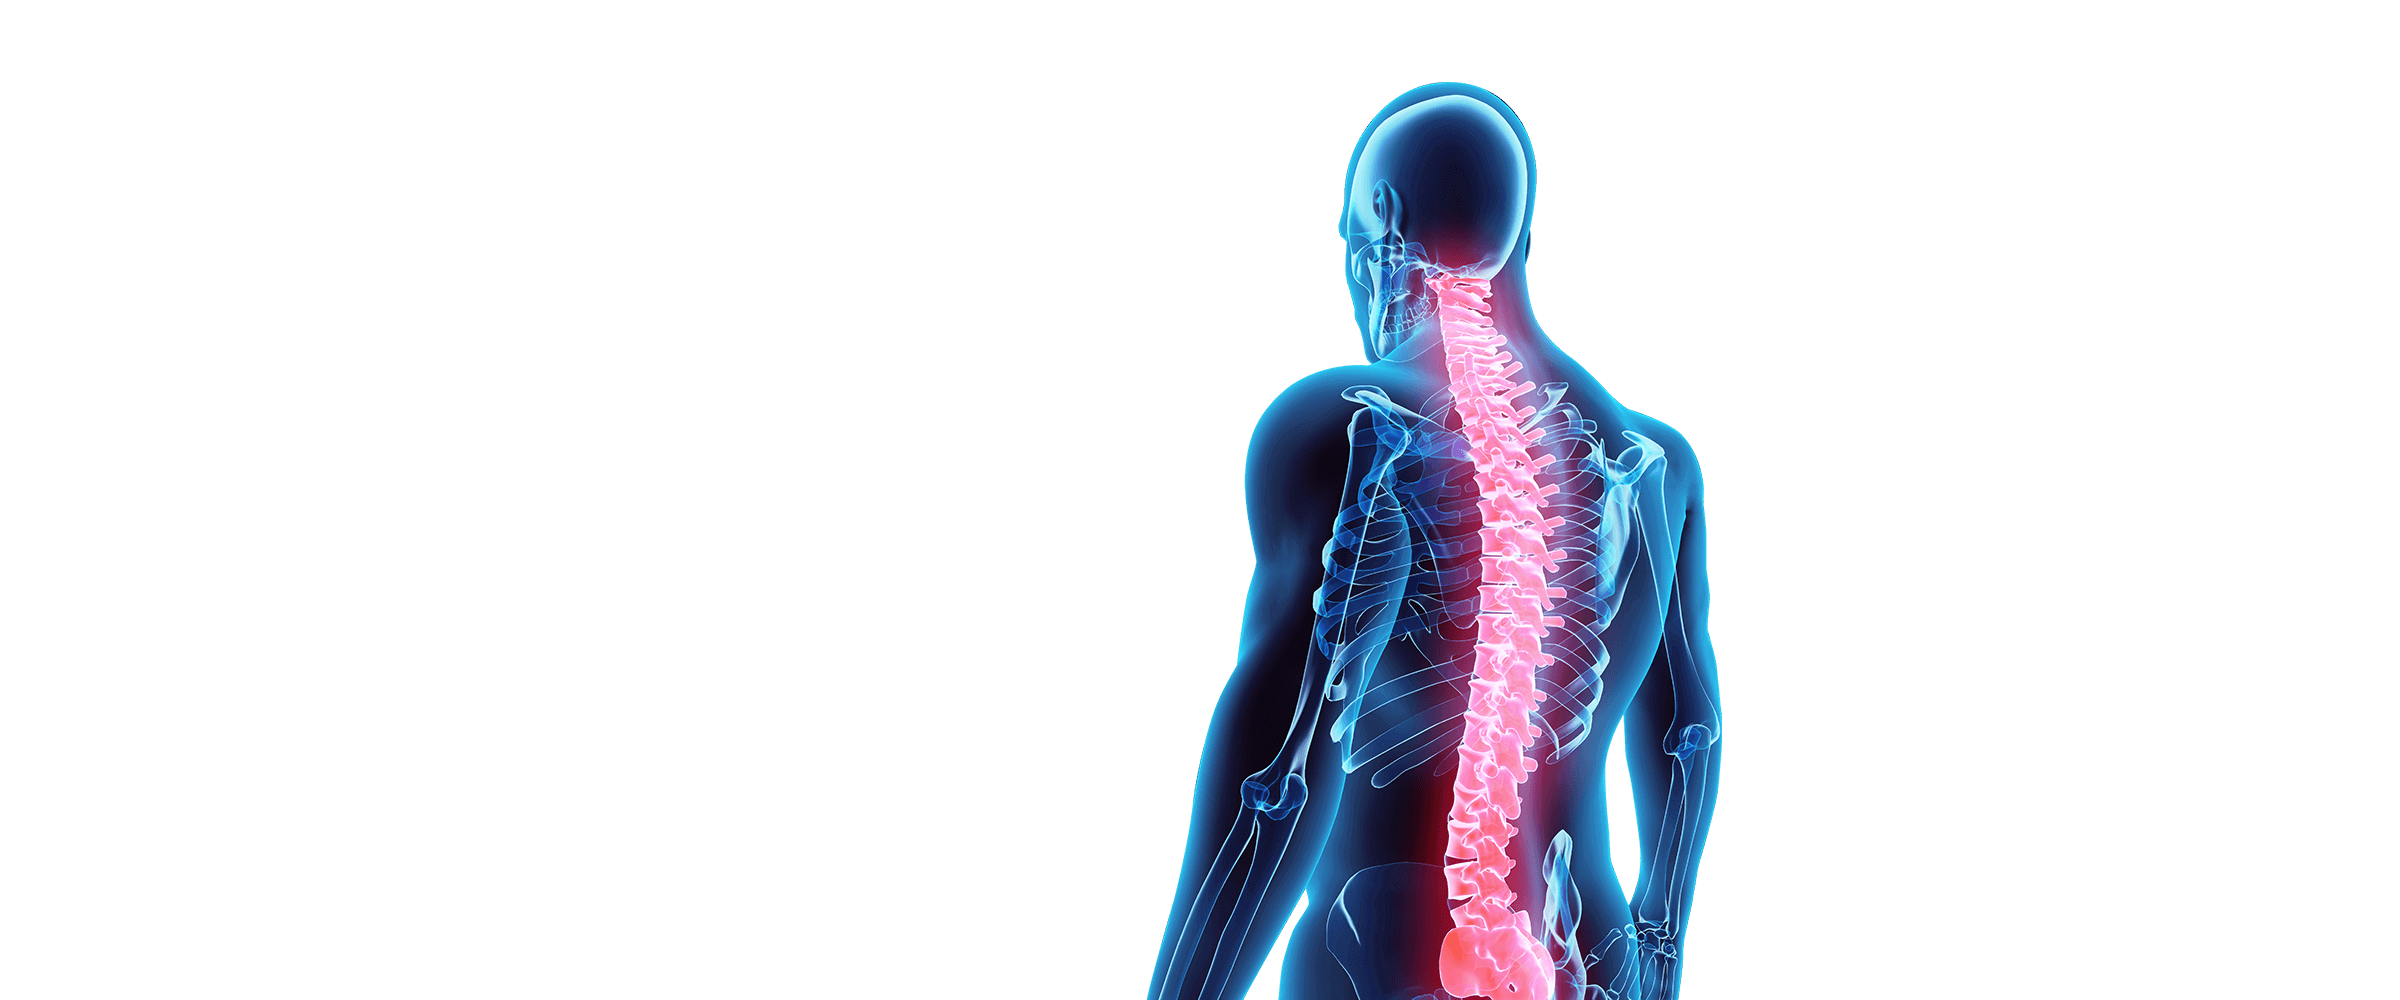 Human spine illustration